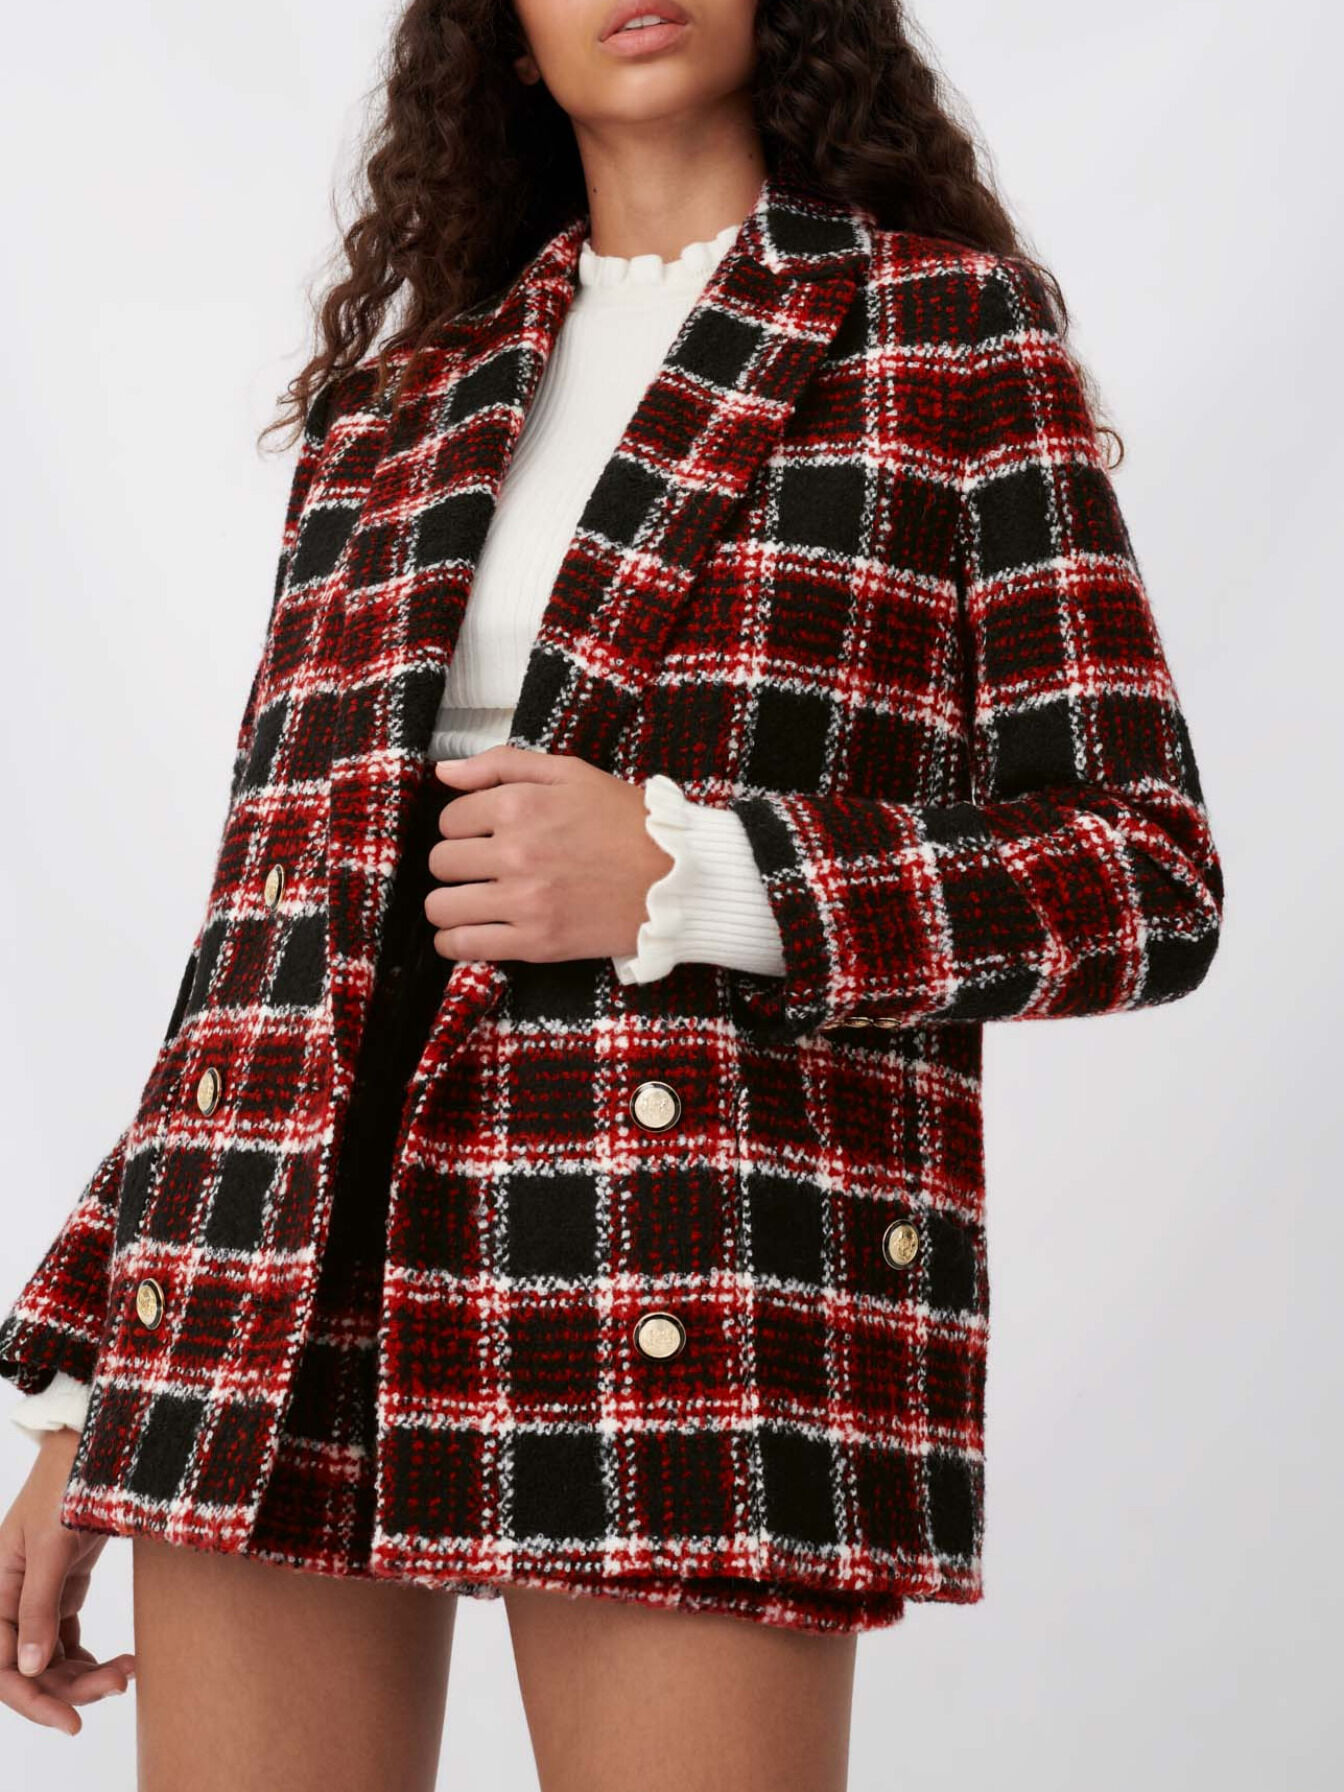 checkered jacket